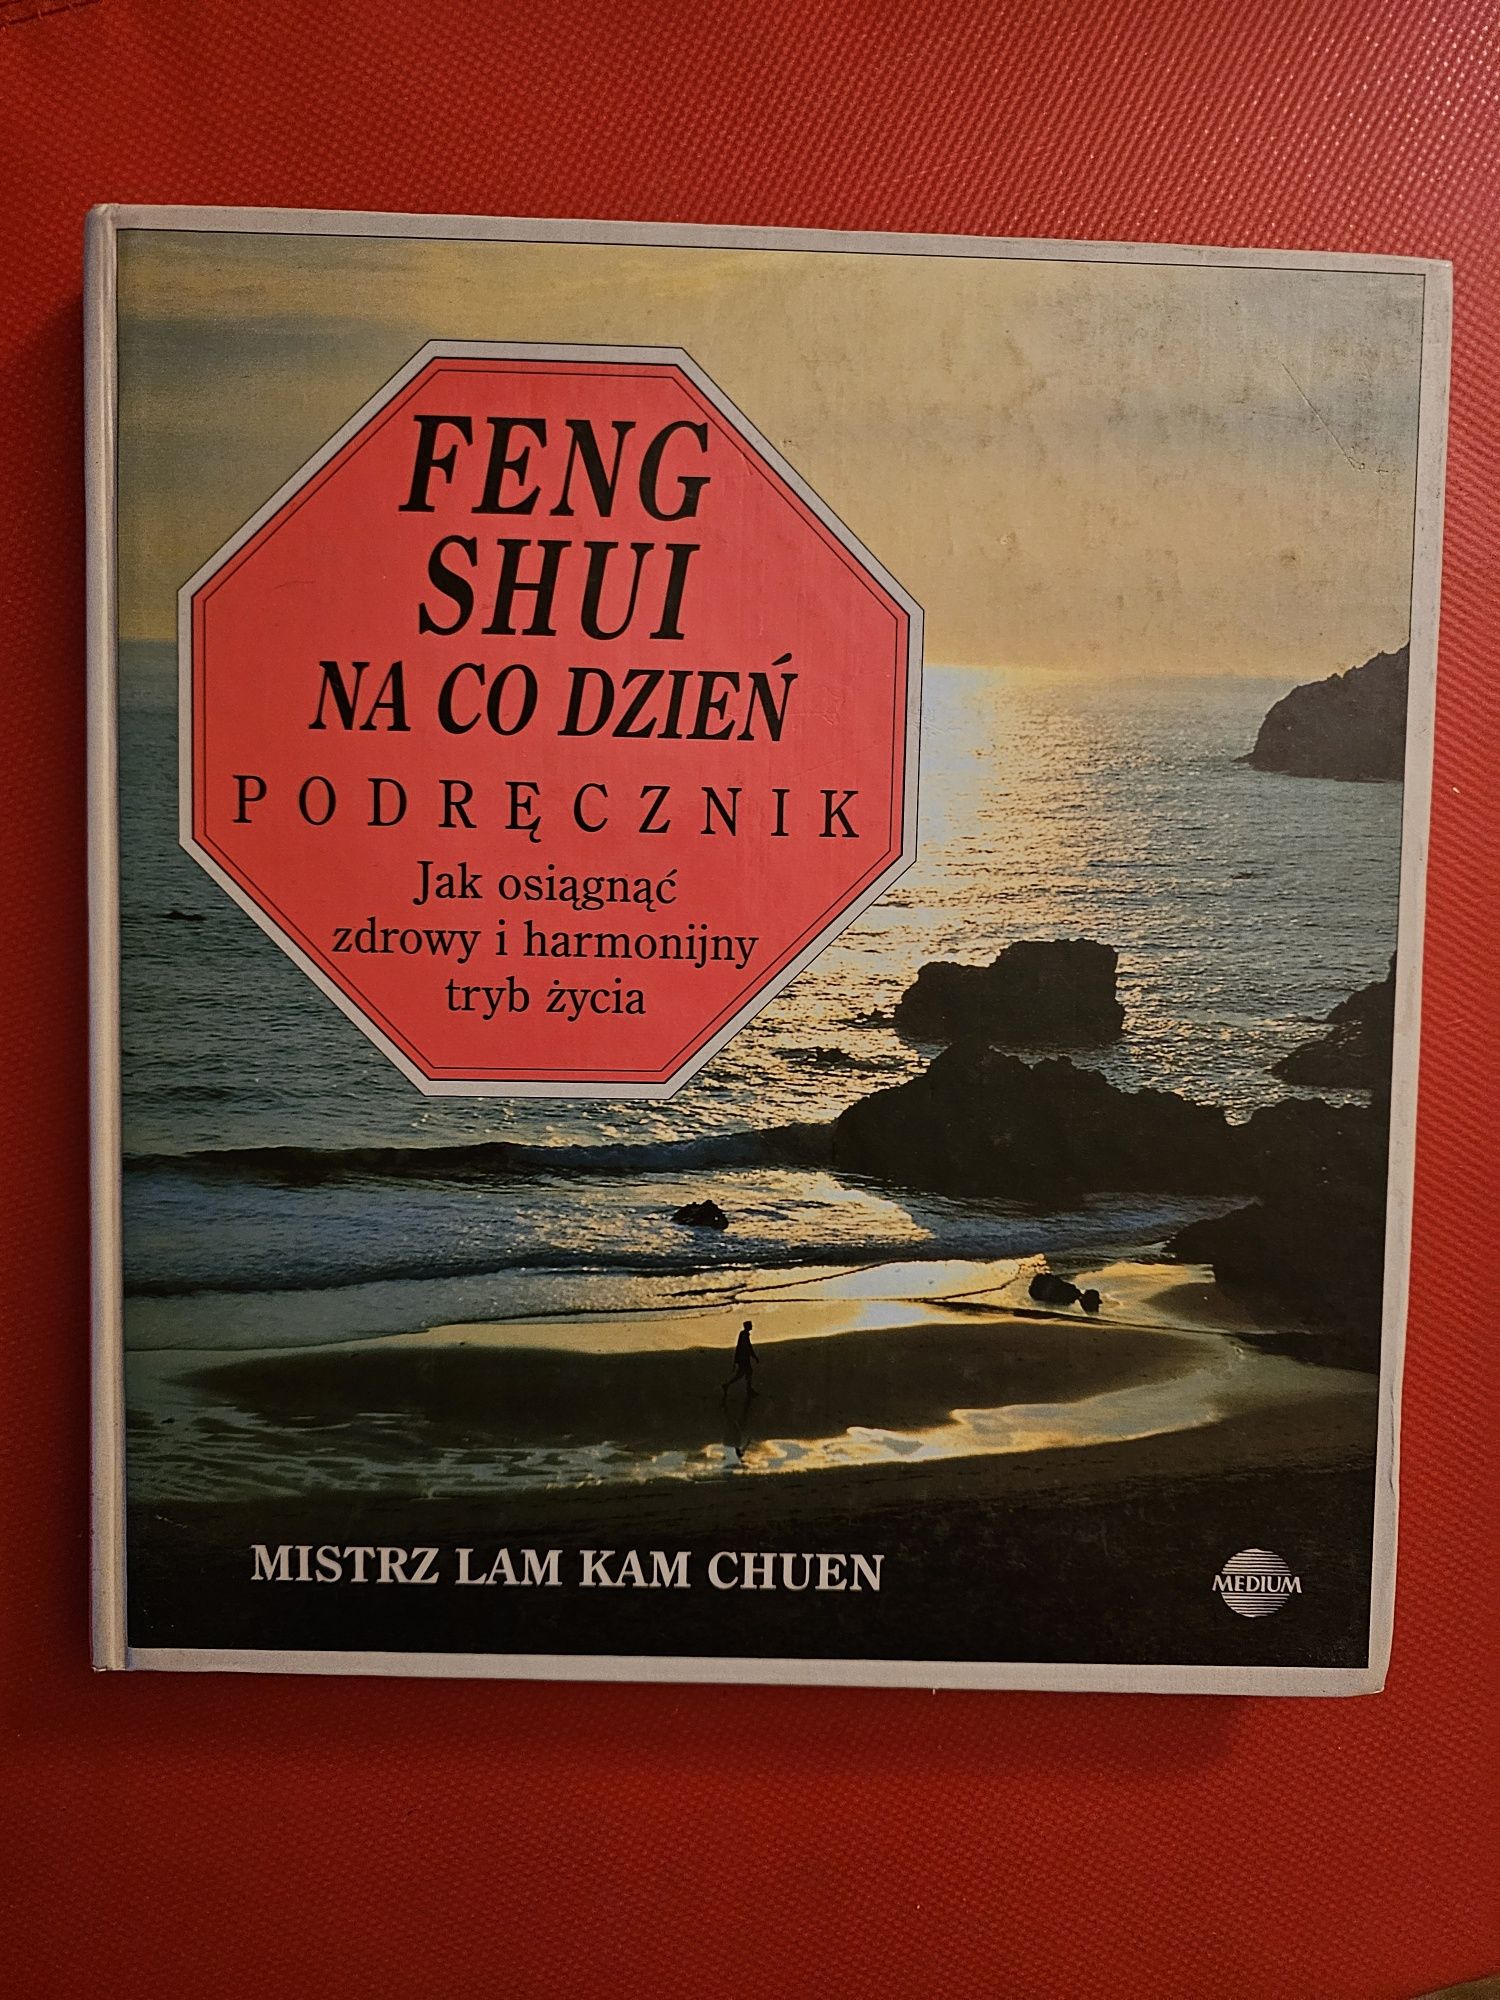 Feng Shui - podręcznik mistrza Lam Kam Chuen